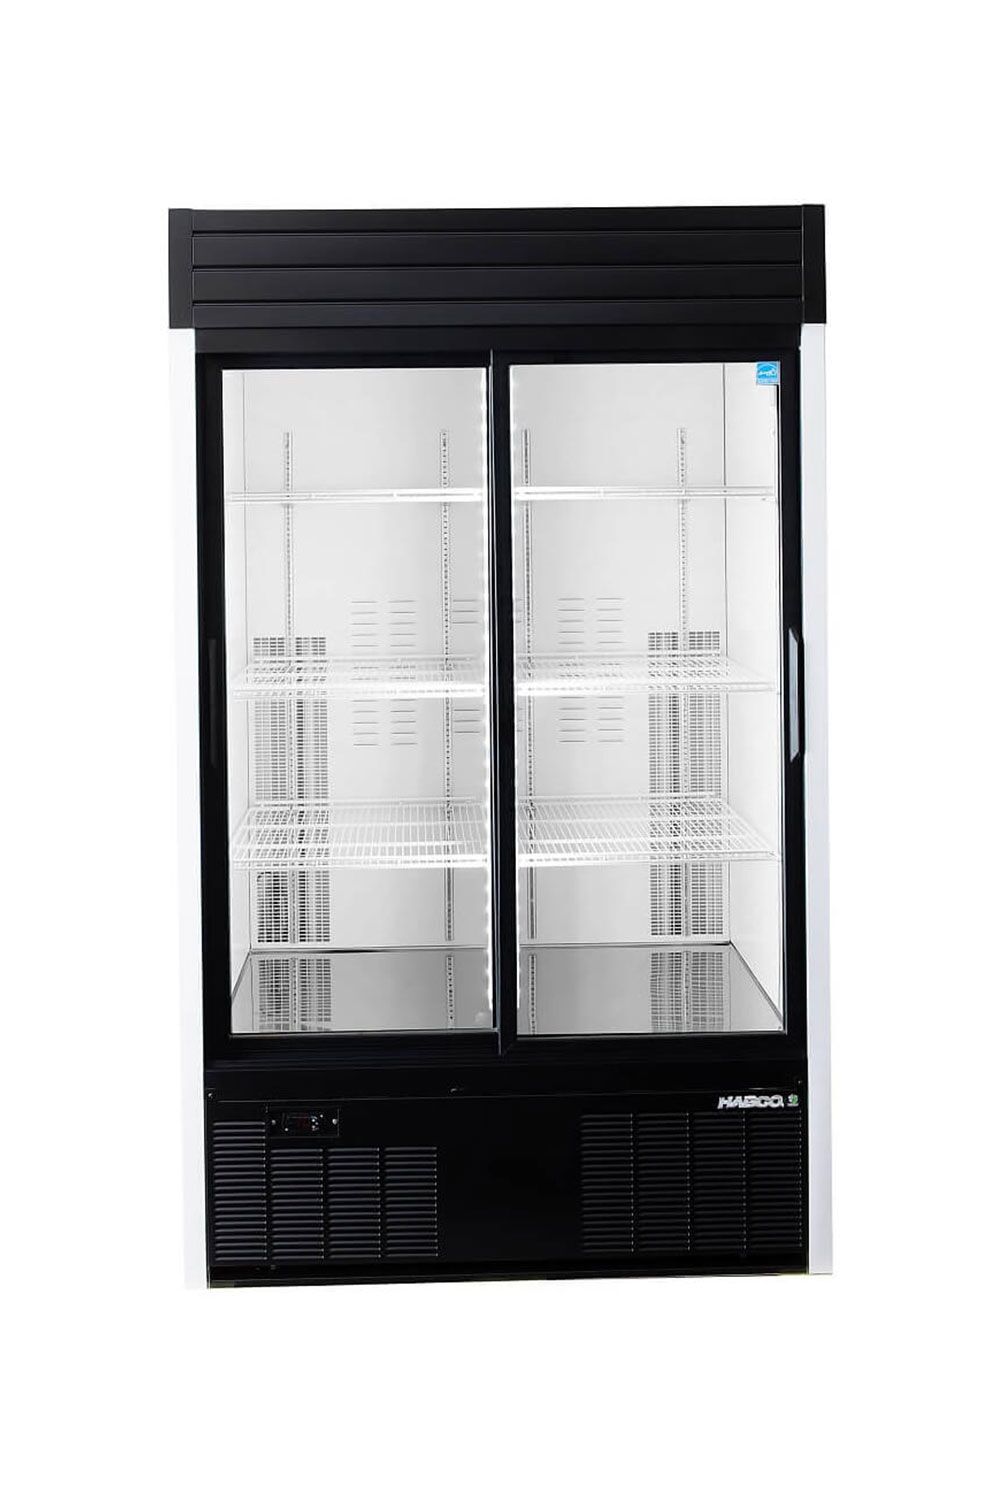 Habco Esm42-Hc Refrigerator 2 Sliding Doors 47.5Lx31Px